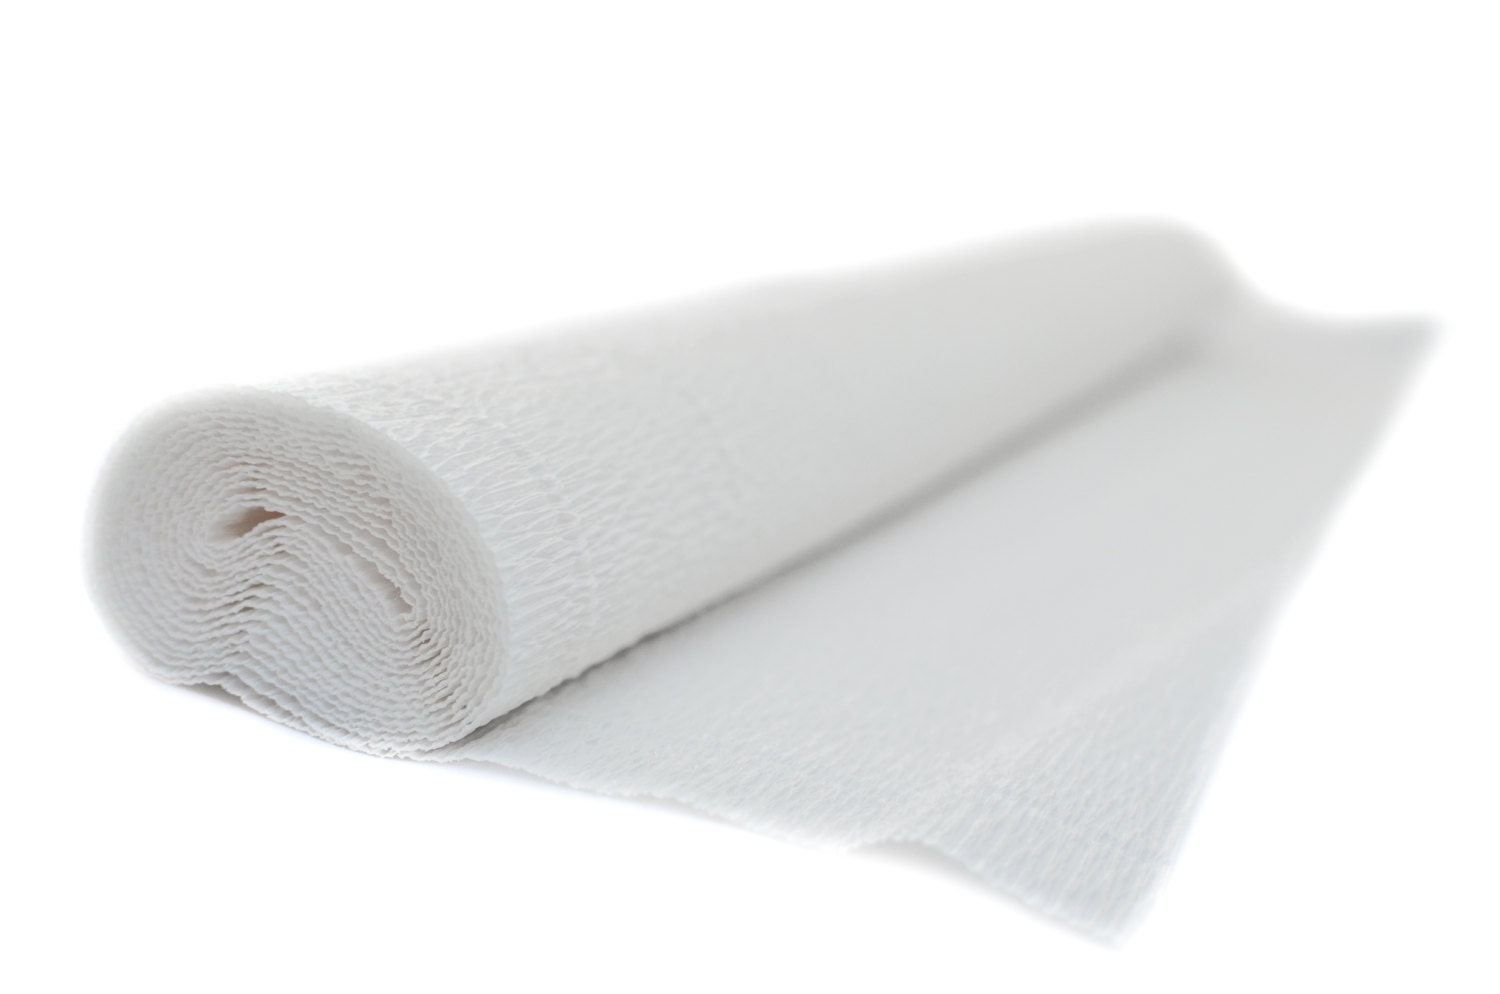 White crepe paper roll